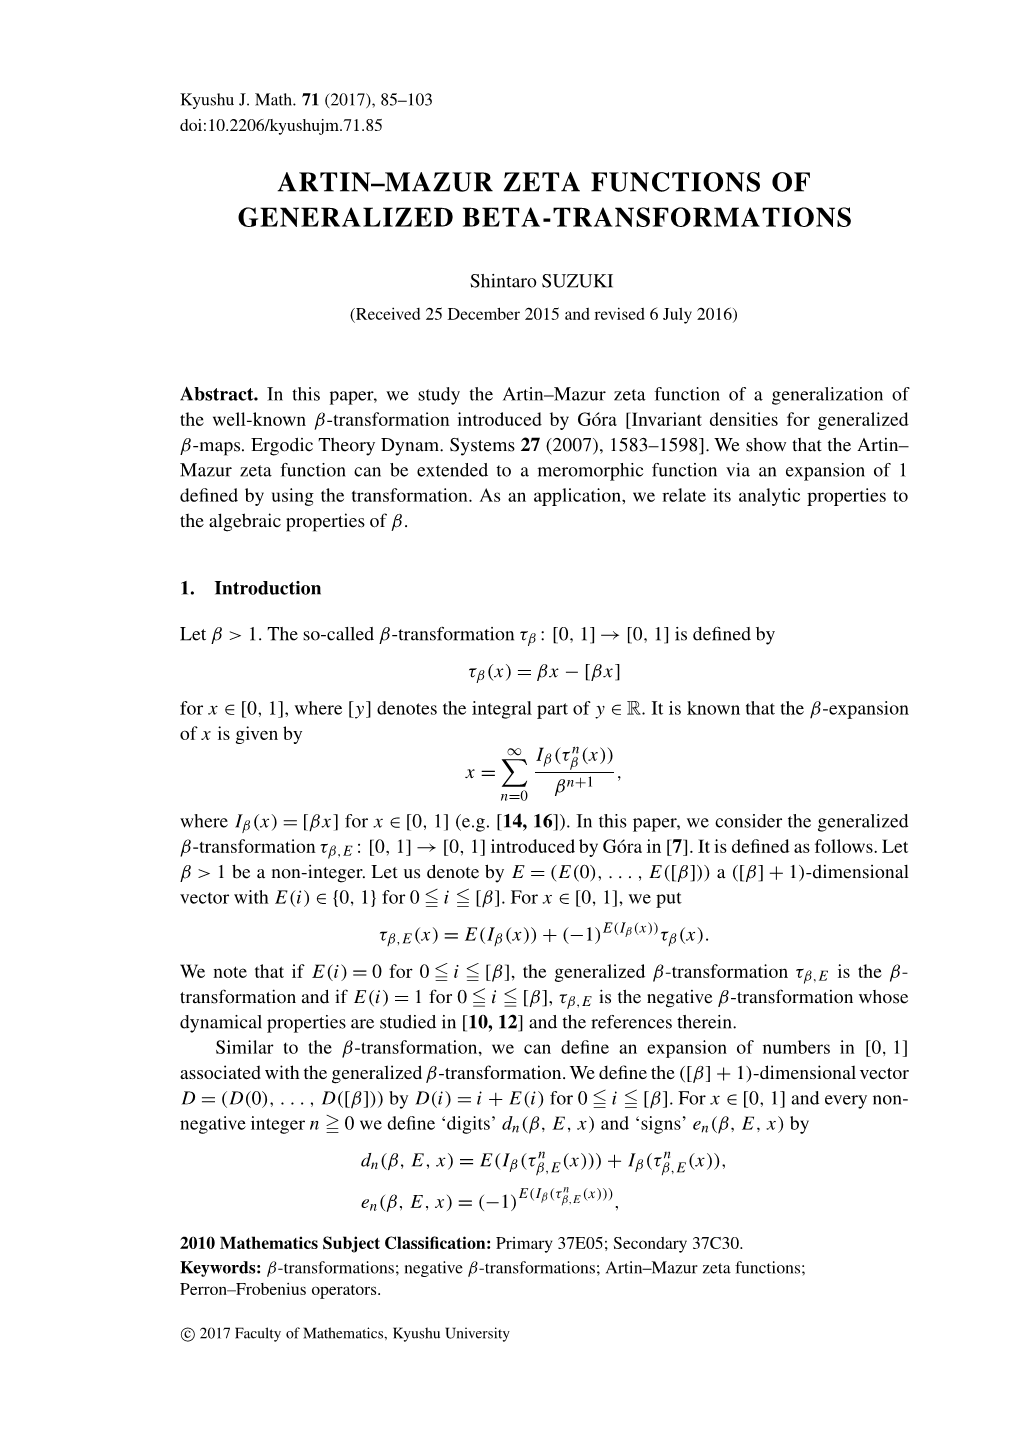 Artin–Mazur Zeta Functions of Generalized Beta-Transformations